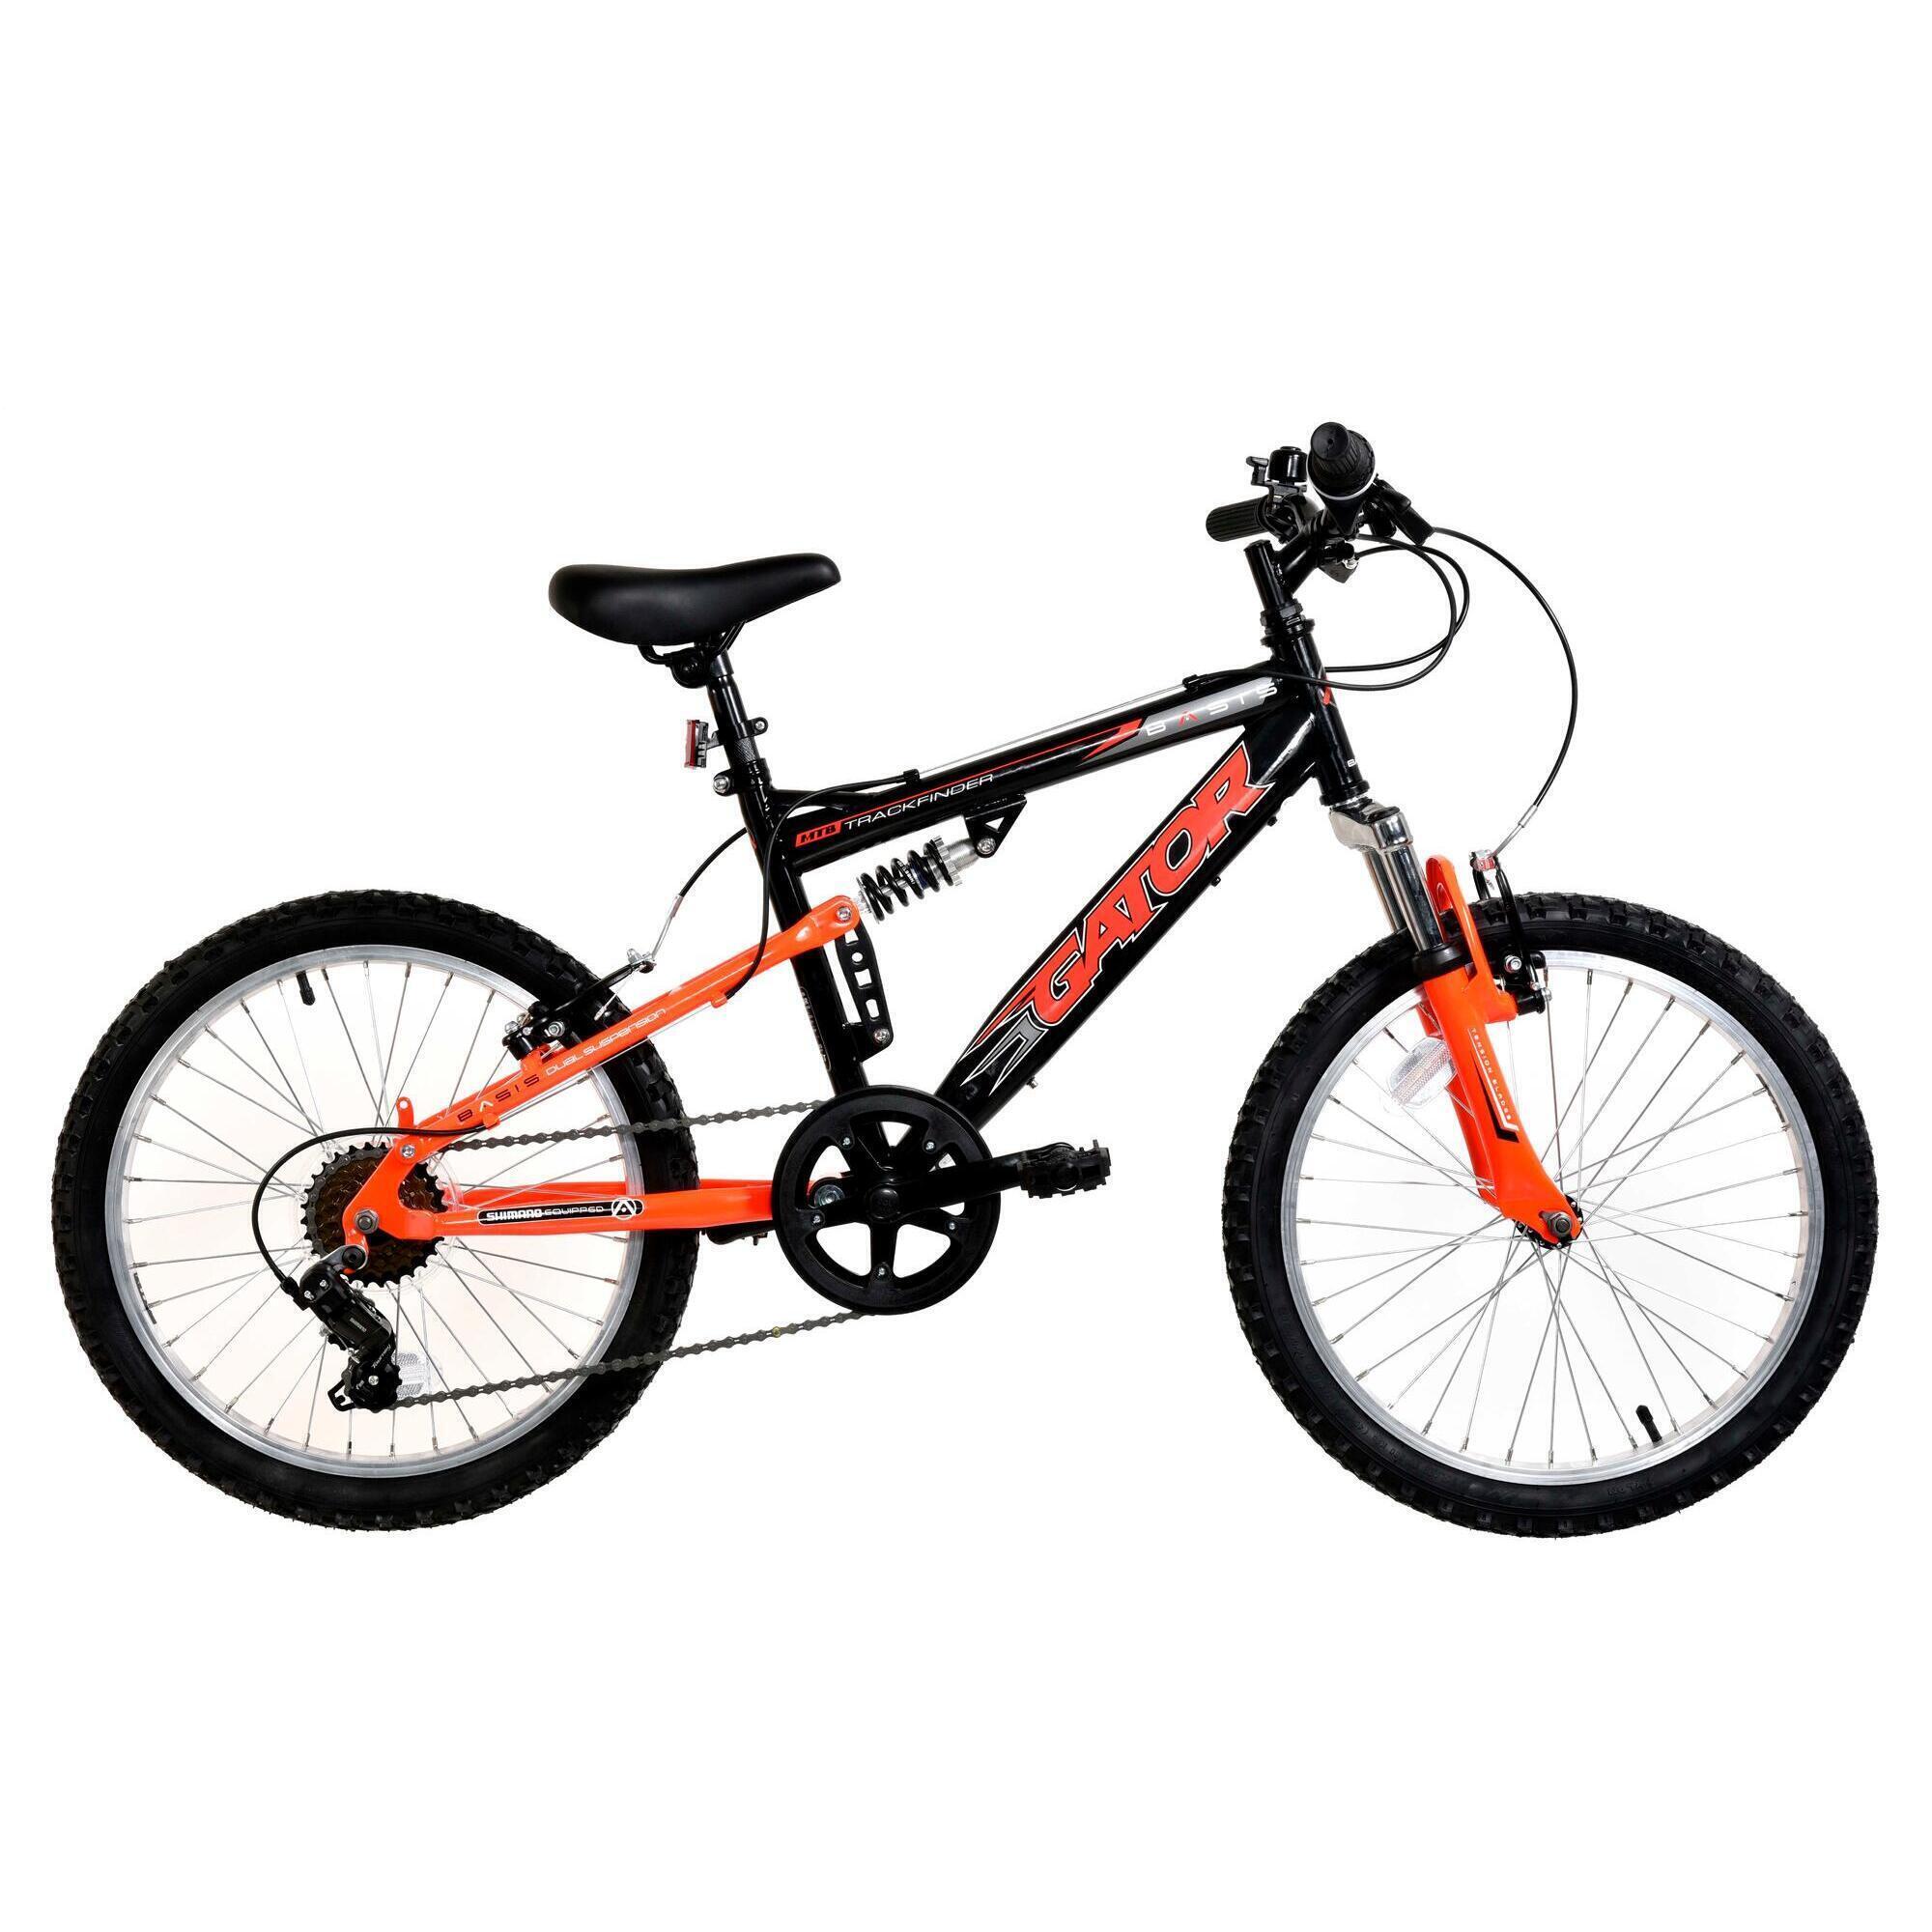 Basis Gator Junior Full Sus Mountain Bike, 20In Wheel - Gloss Black/Red 1/1